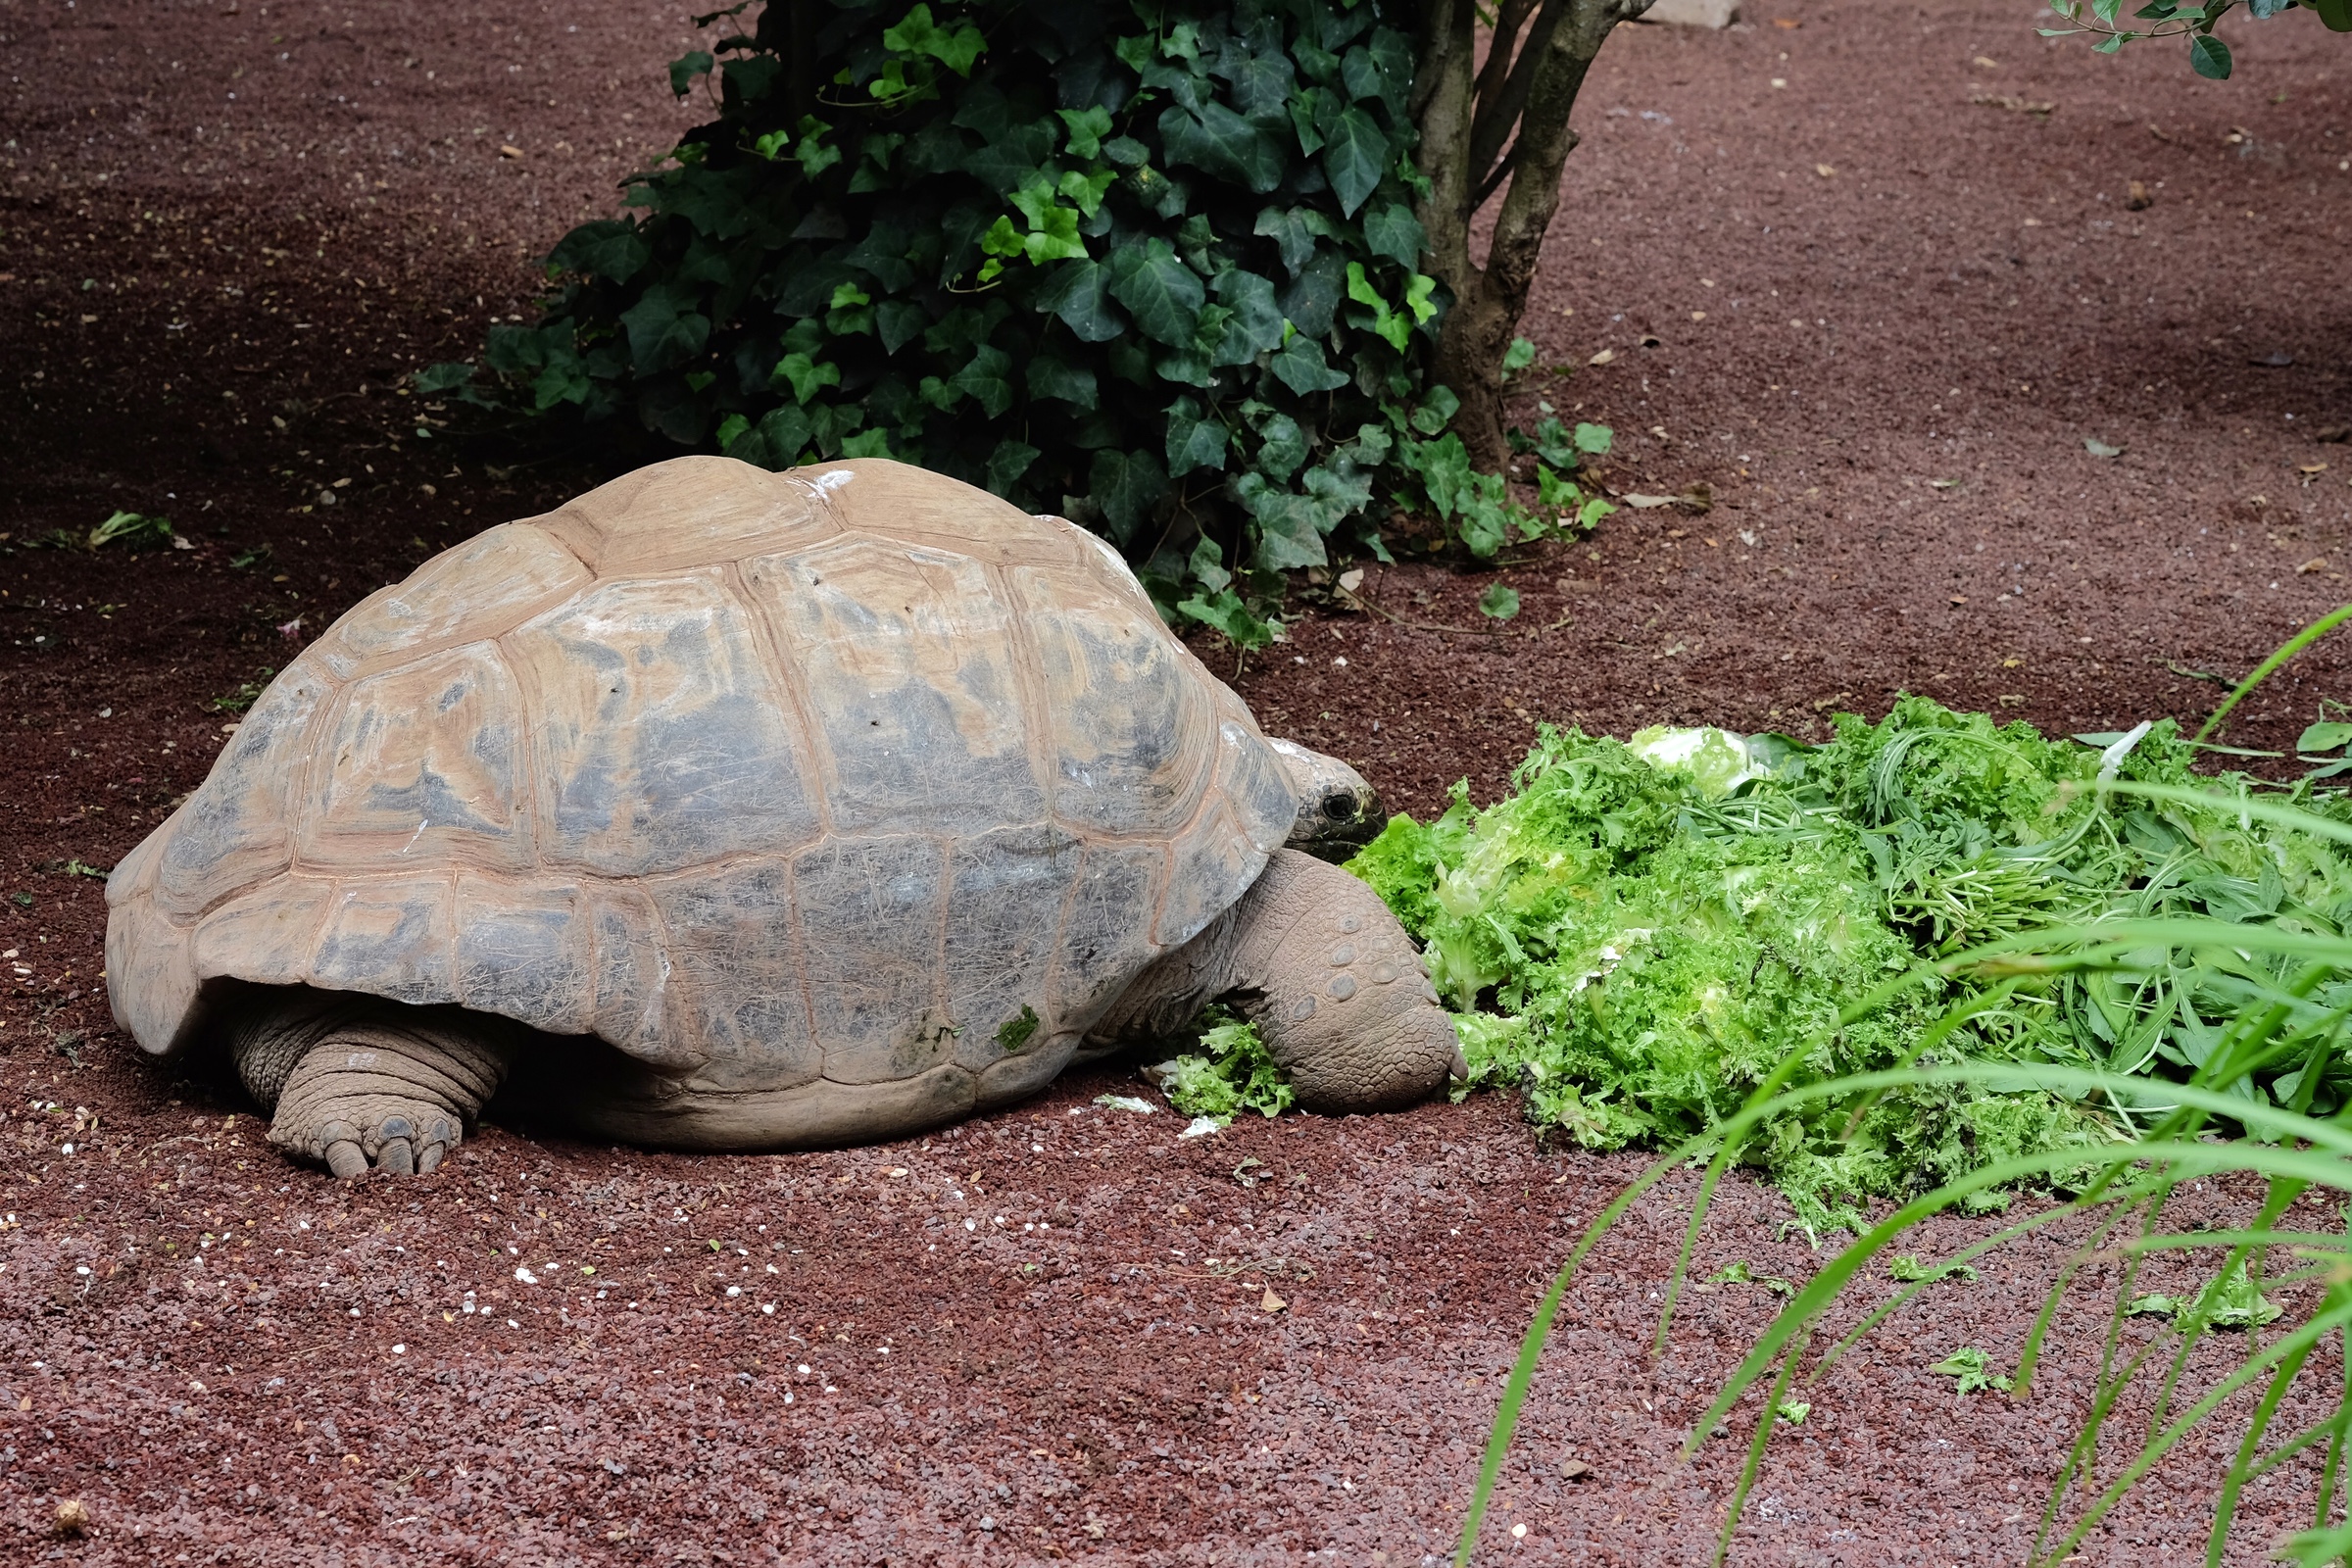 Rowan took this photo of a Giant Tortoise eating an Italian salad.